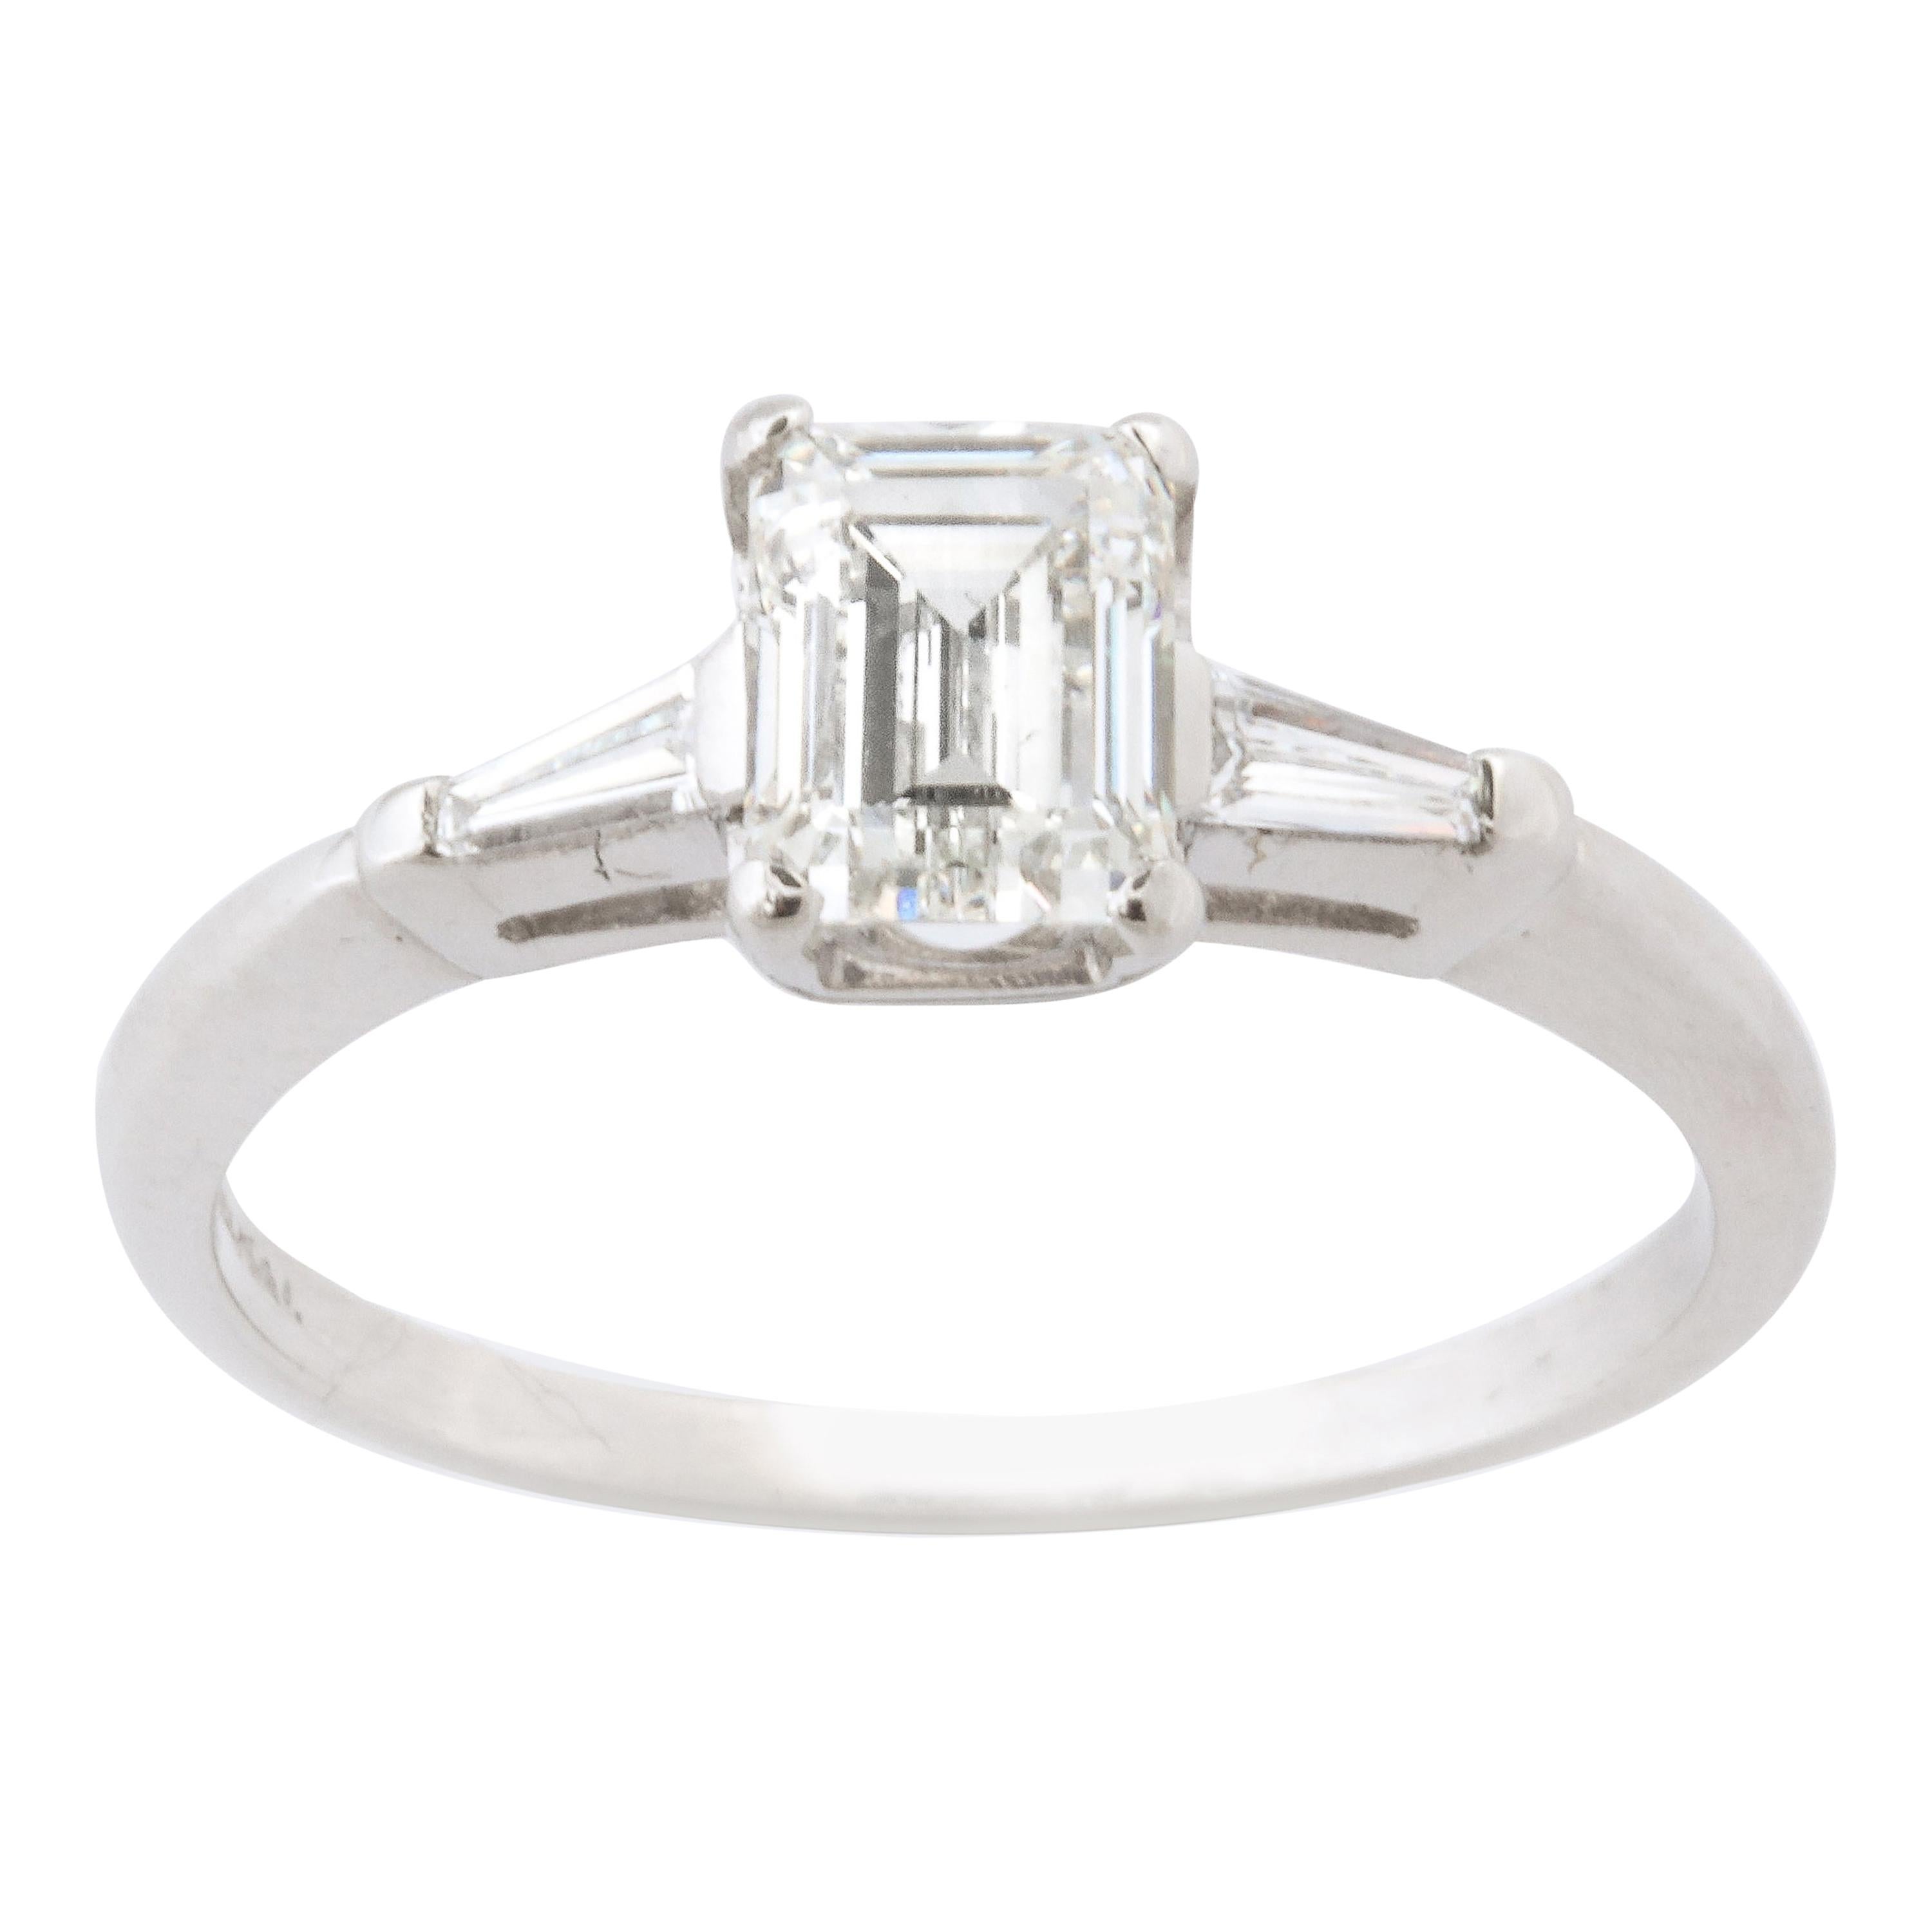 Art Deco Emerald Cut 1.07carat Diamond Engagement Ring with Baguettes GIA cert For Sale